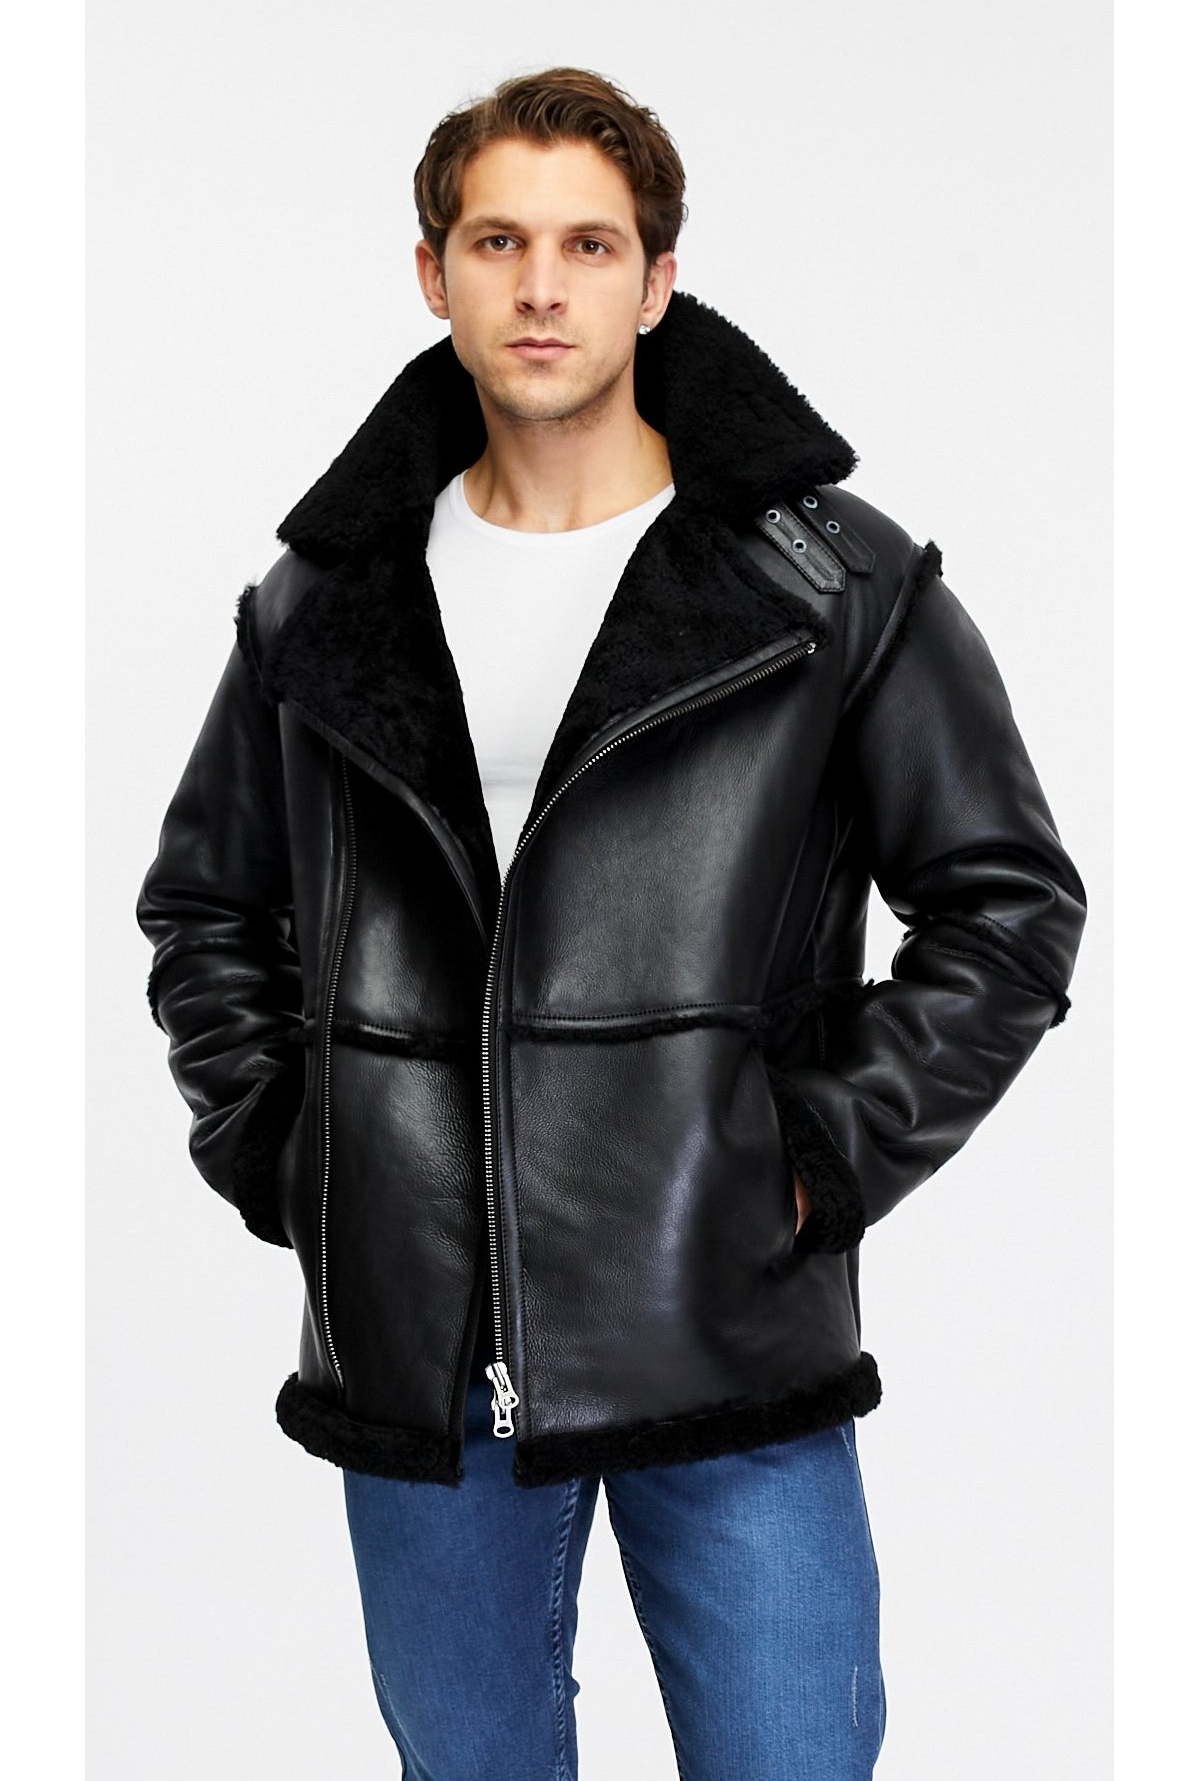 Men's Fashion Leather Jacket Wool, Black - Black